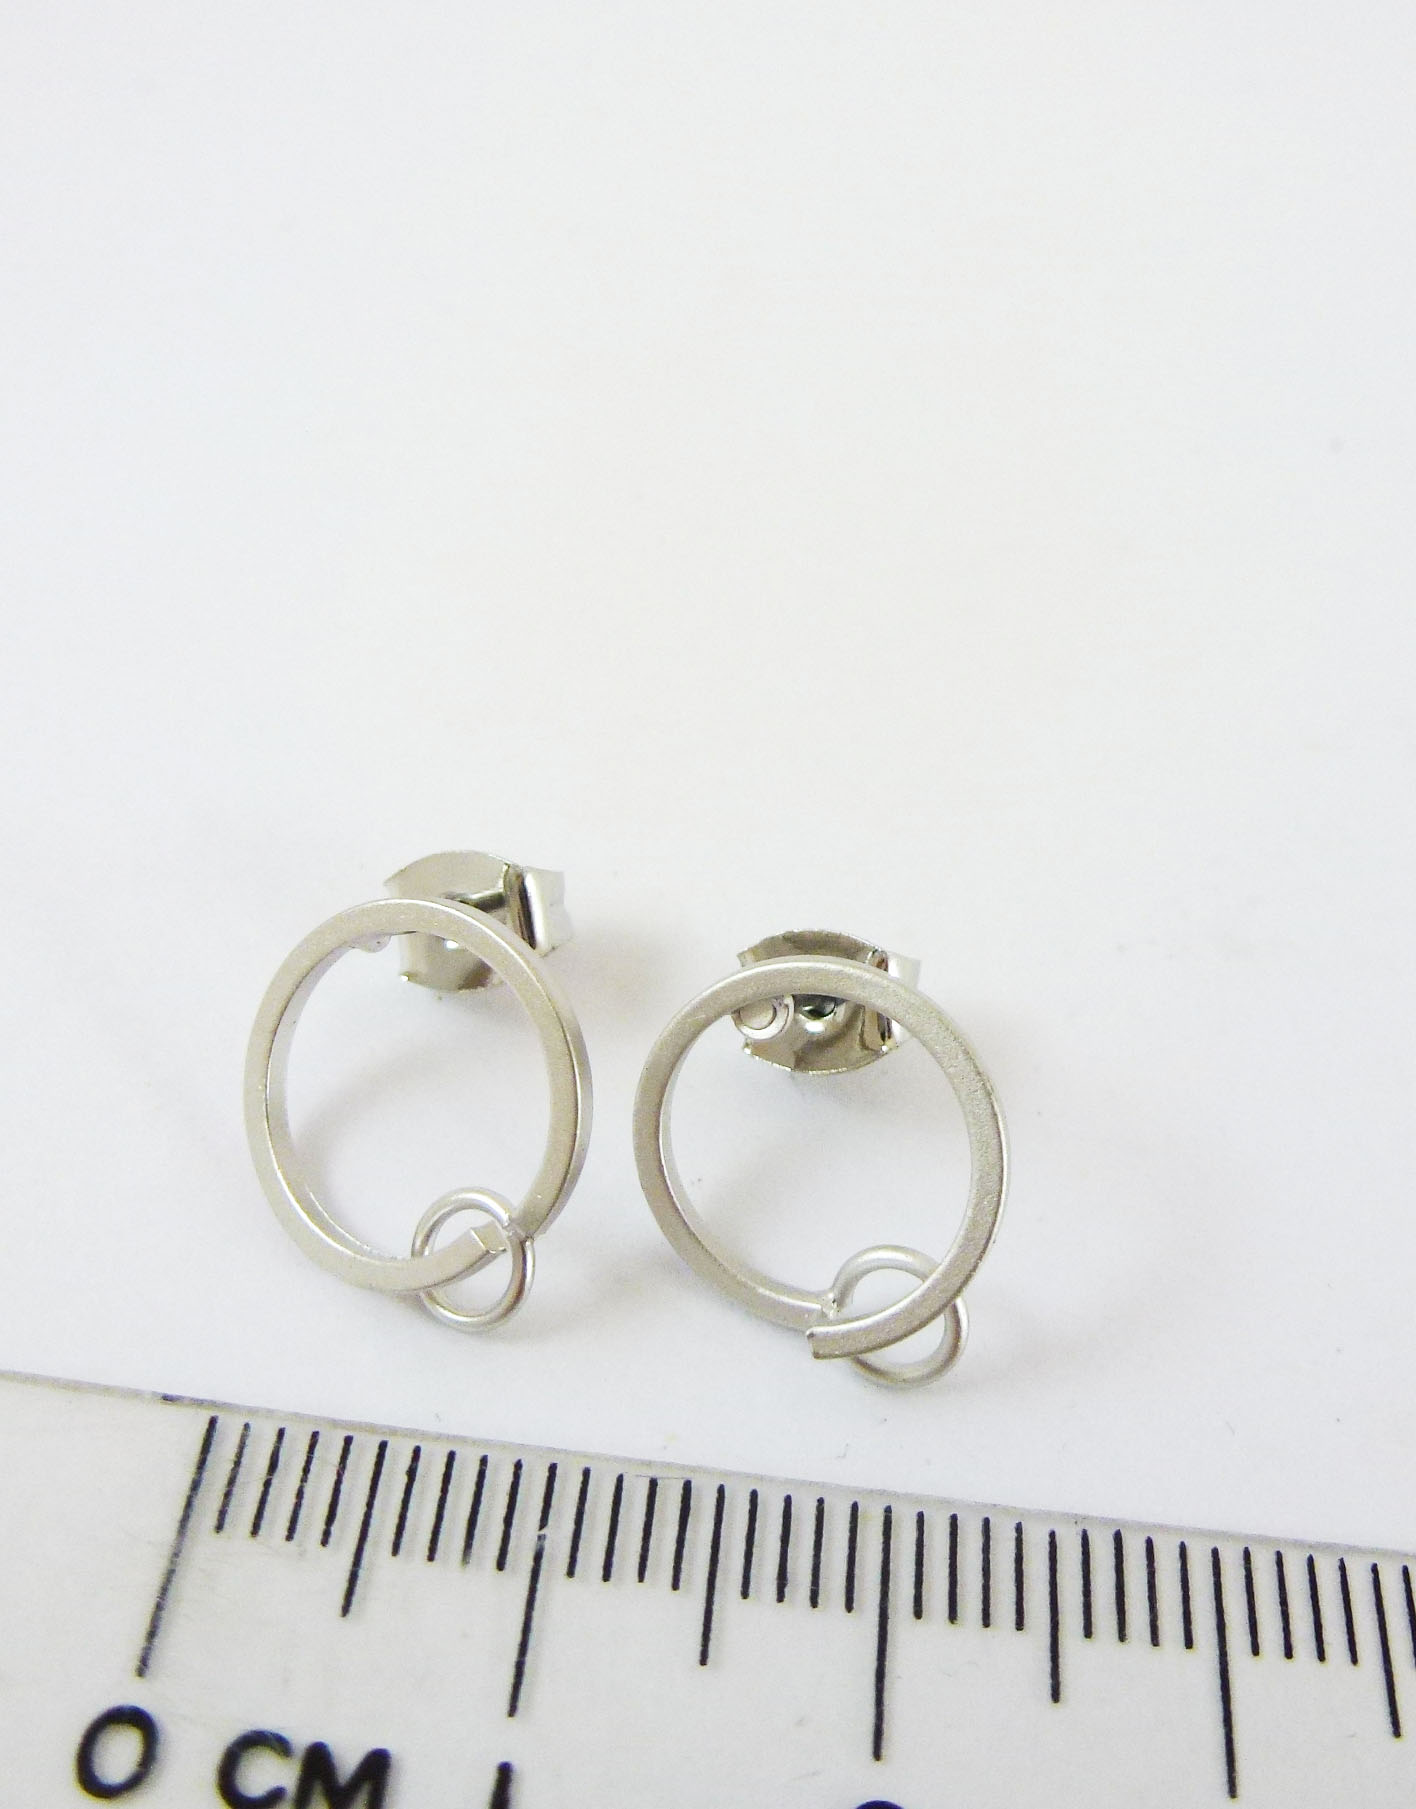 12mm銅鍍霧銀圓環不銹鋼耳針